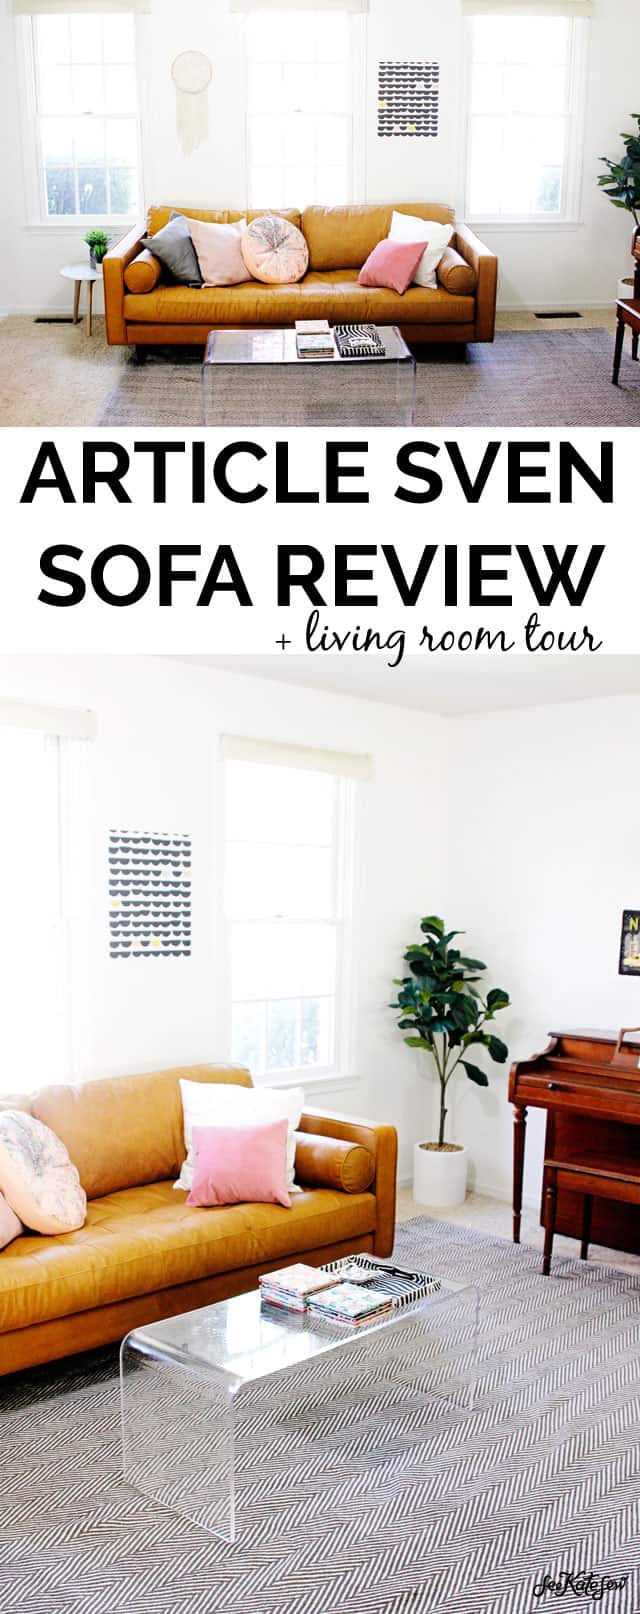 Living Room Tour + Article Sven Sofa Review